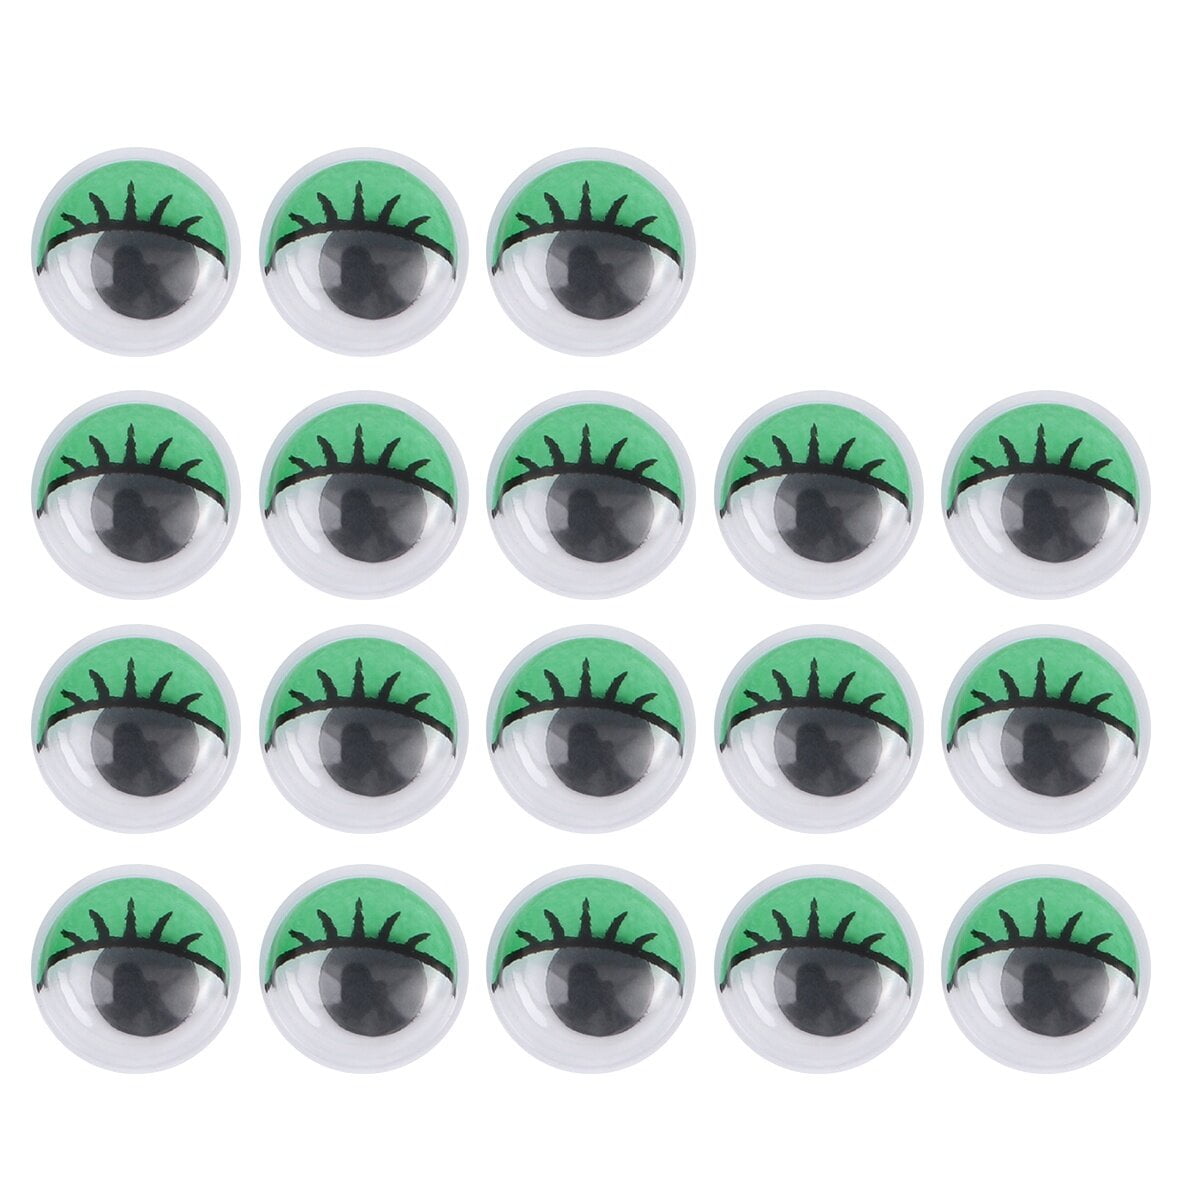 55pcs 10mm Sticky Googly Eyes With Eyelashes